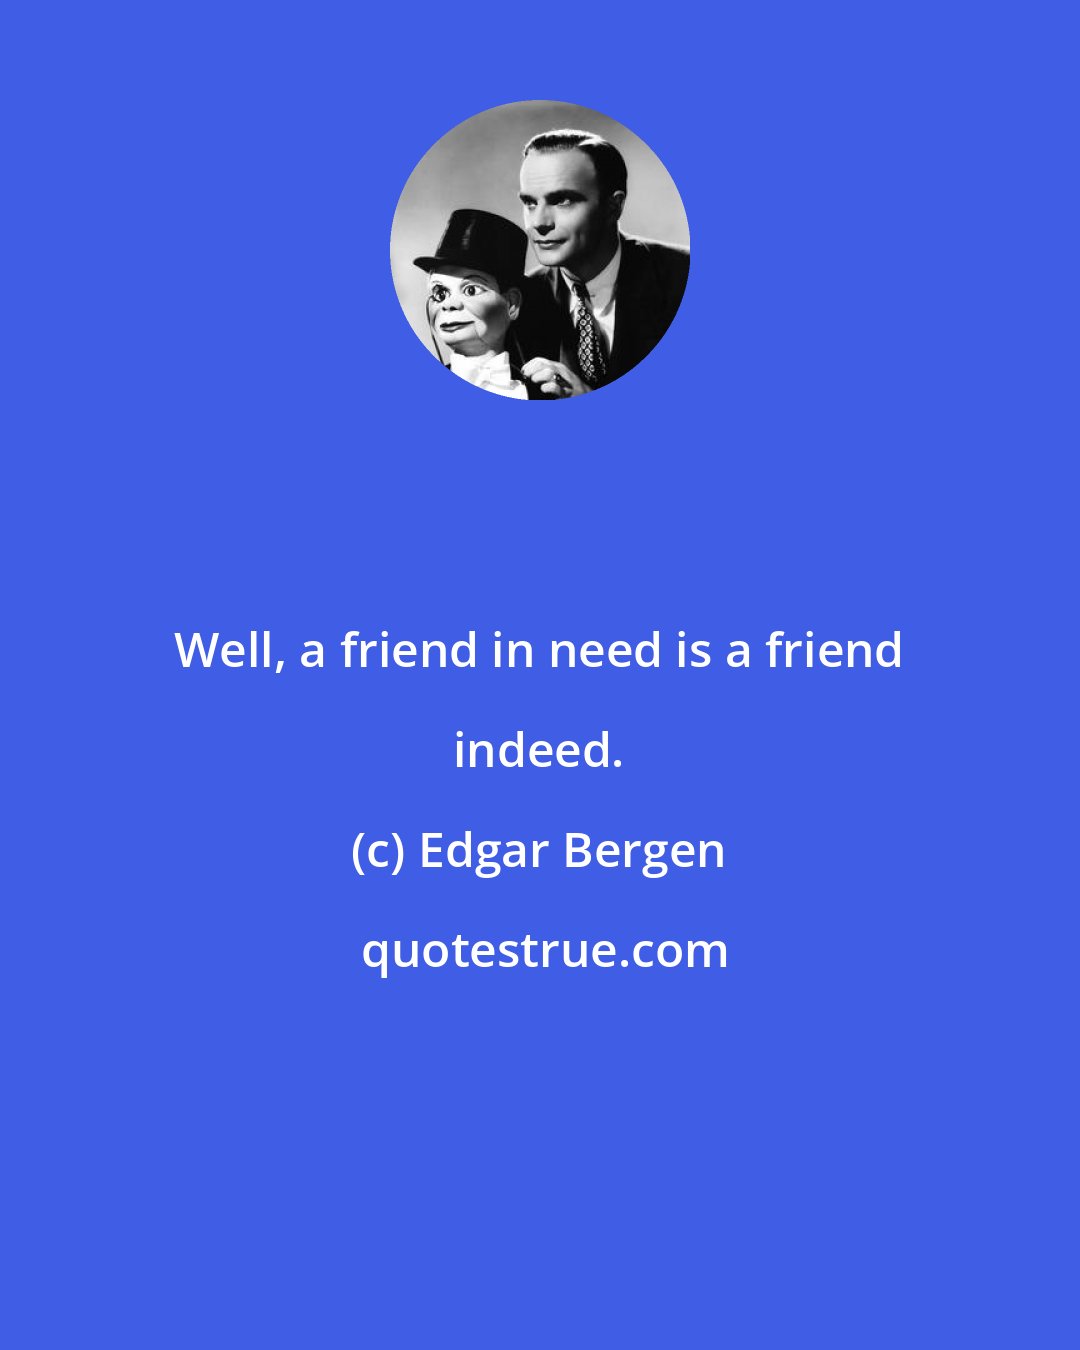 Edgar Bergen: Well, a friend in need is a friend indeed.